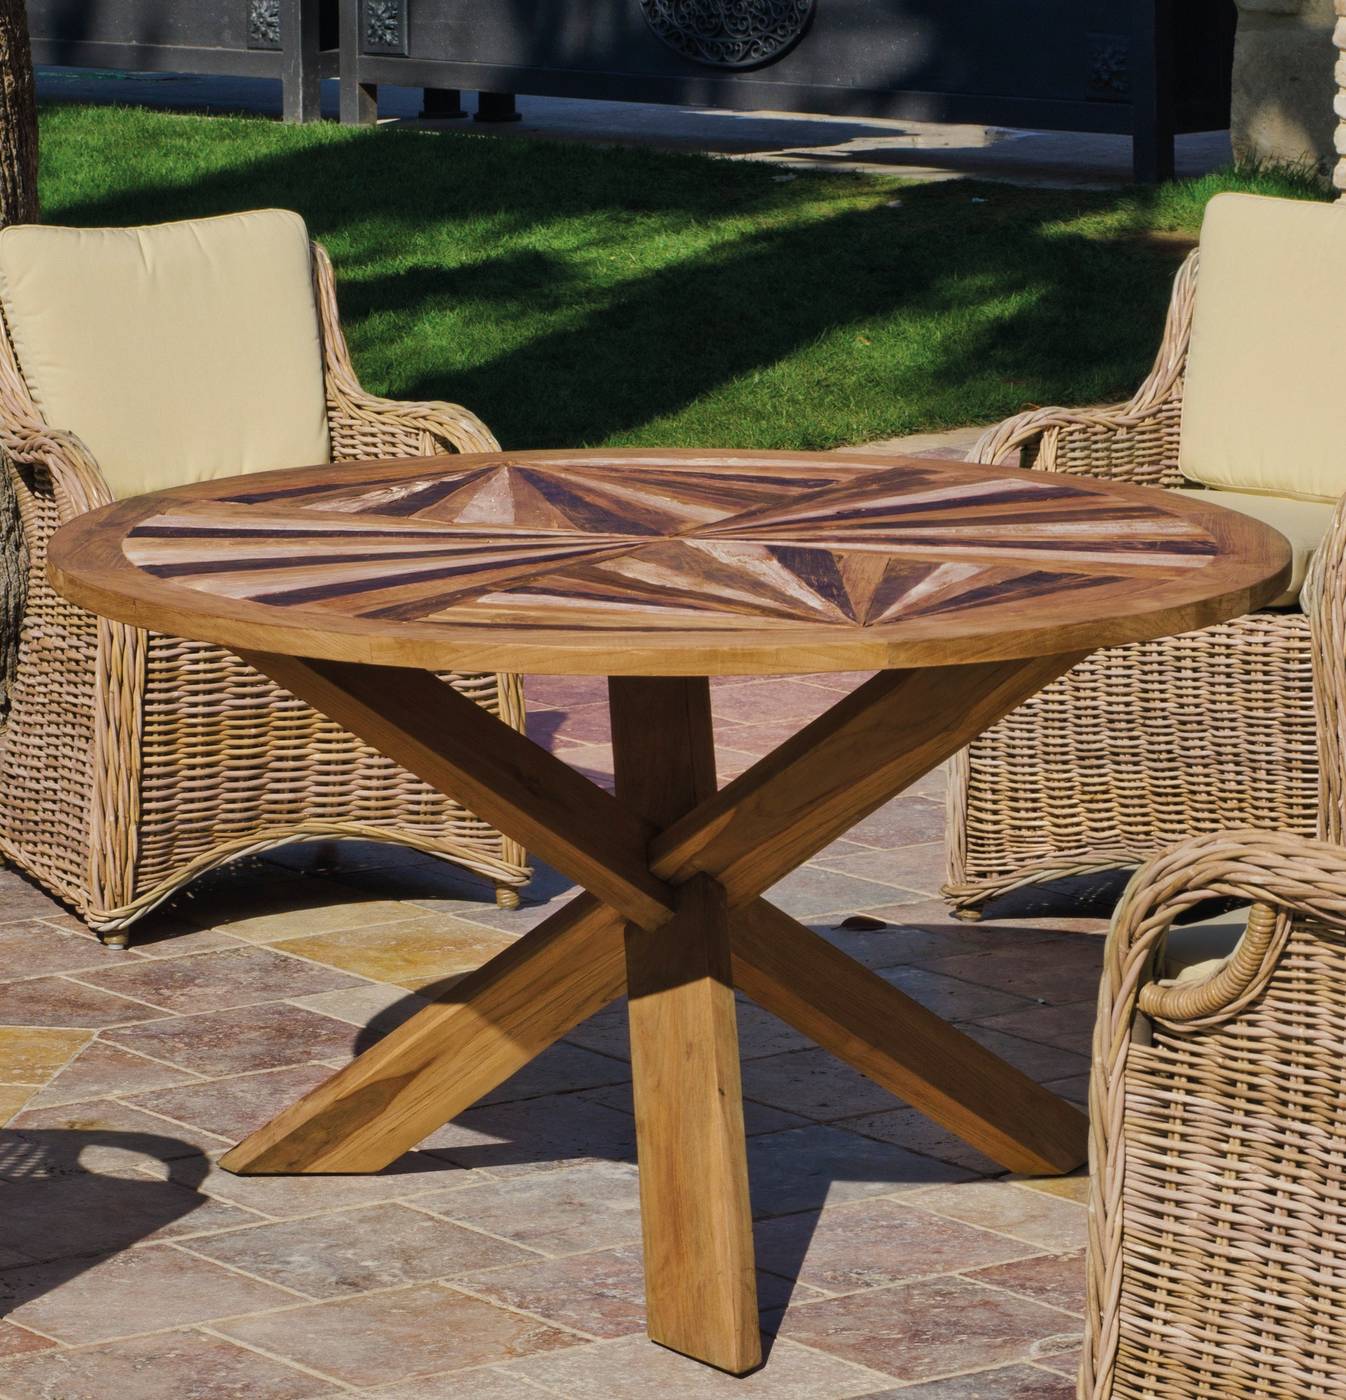 Set Madera Teka Rich-Babylon-140 - Conjunto para jardín de madera de teka: mesa de madera de teka de 140 cm + 4 sillones con cojines de ratán sintético